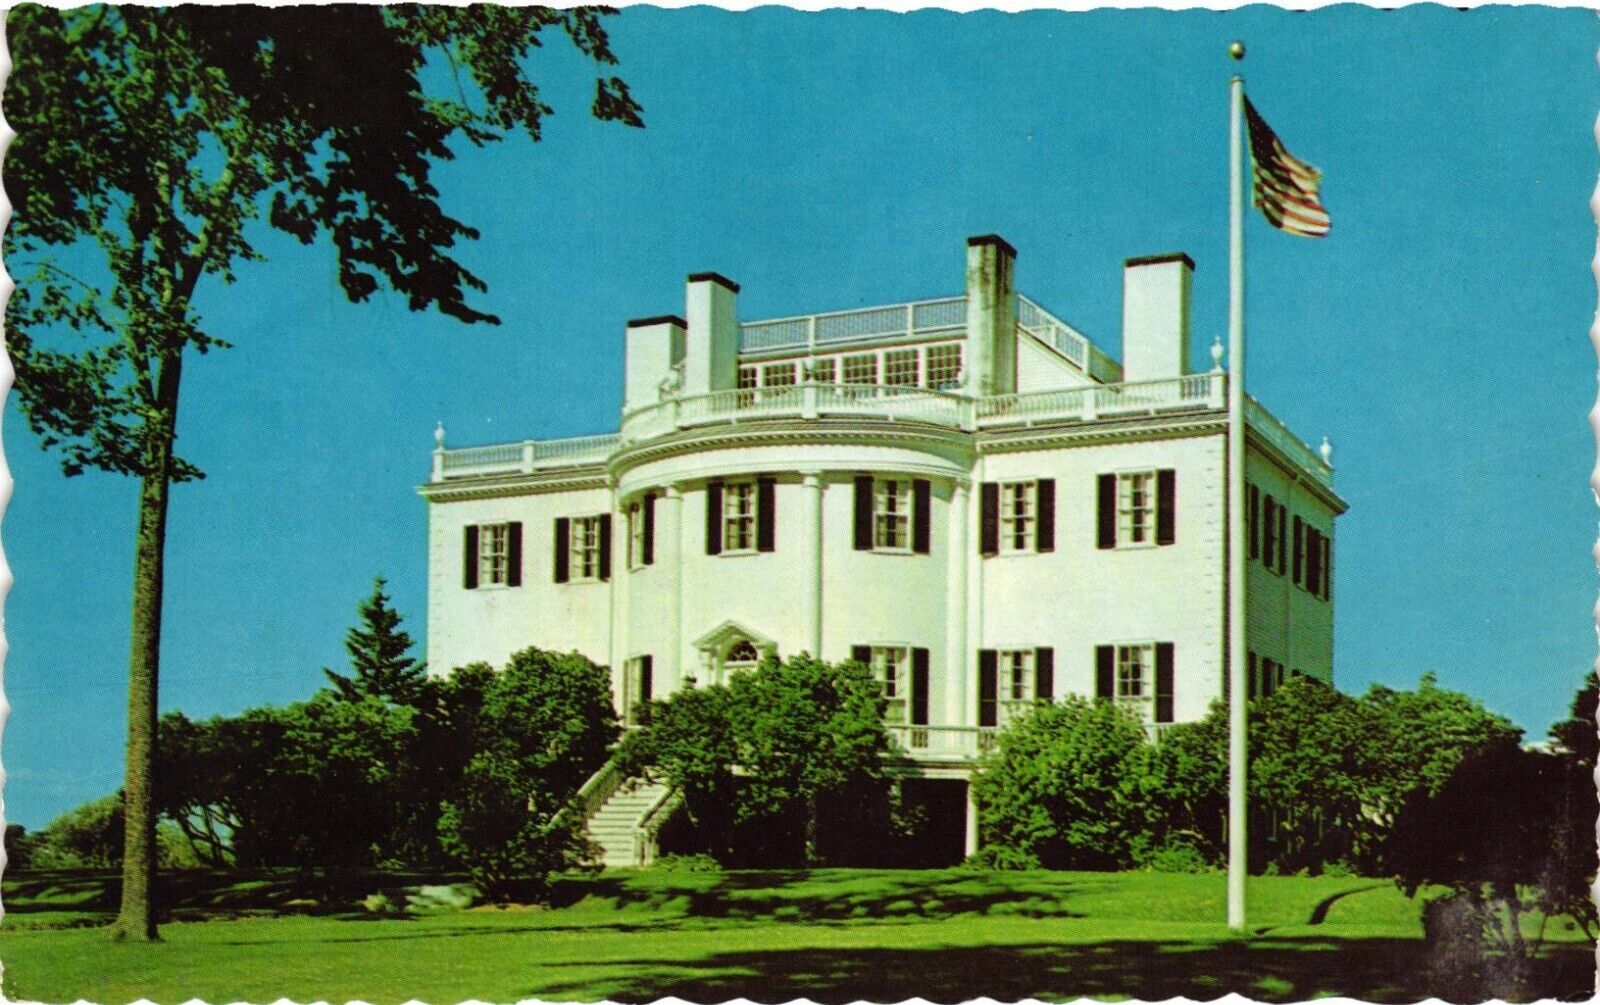 Postcard Montpelier a Stately Hilltop Overlooking Thomaston Maine